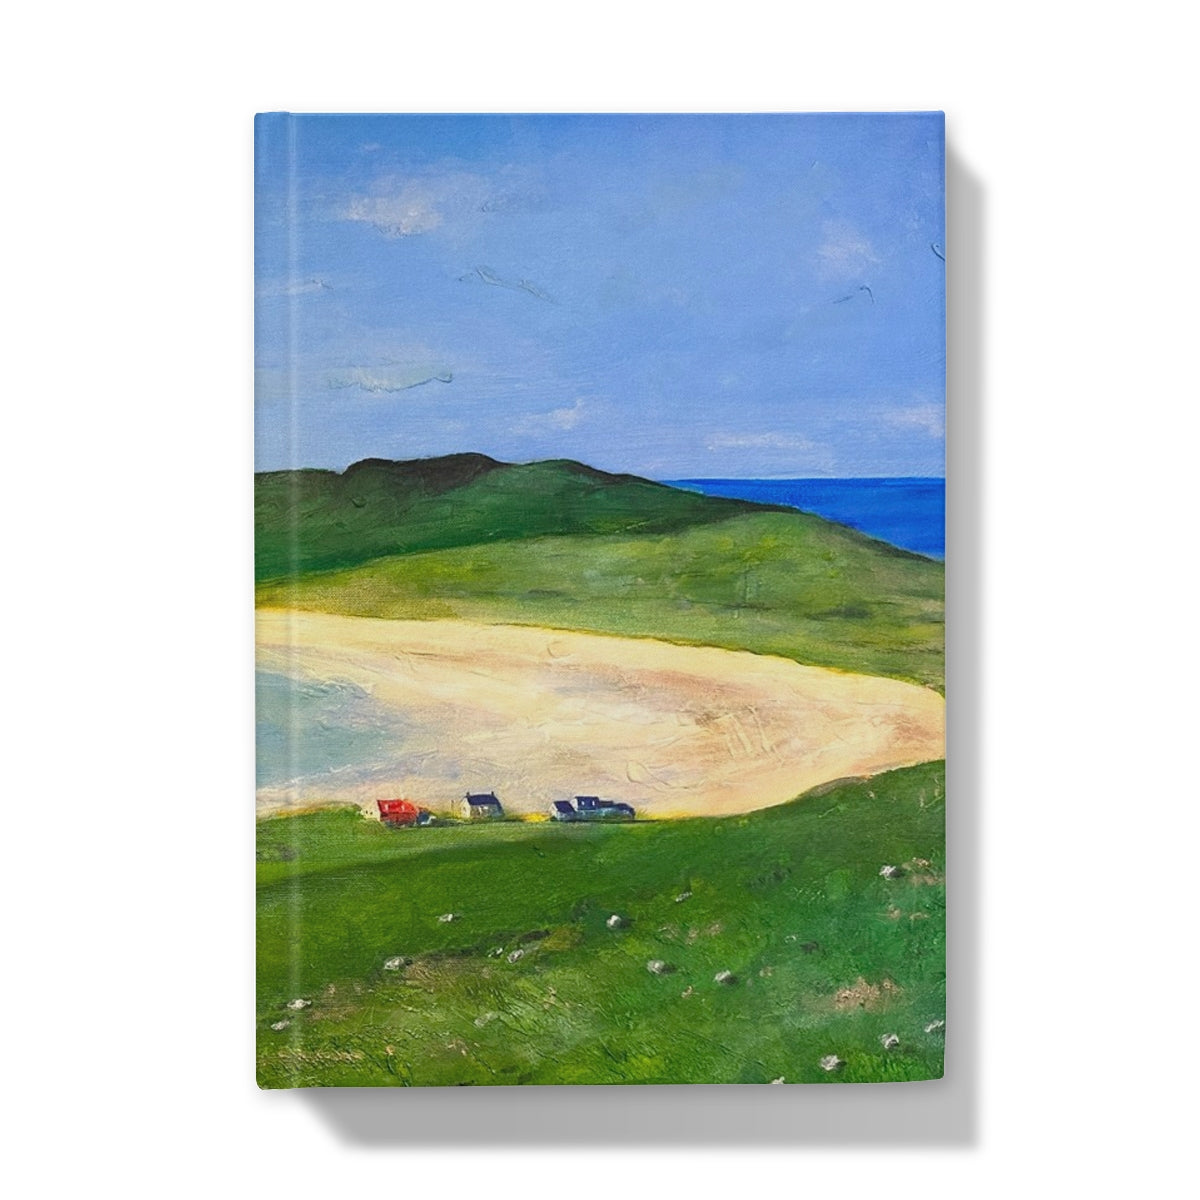 Balephuil Beach Tiree Art Gifts Hardback Journal-Journals & Notebooks-Hebridean Islands Art Gallery-A5-Plain-Paintings, Prints, Homeware, Art Gifts From Scotland By Scottish Artist Kevin Hunter